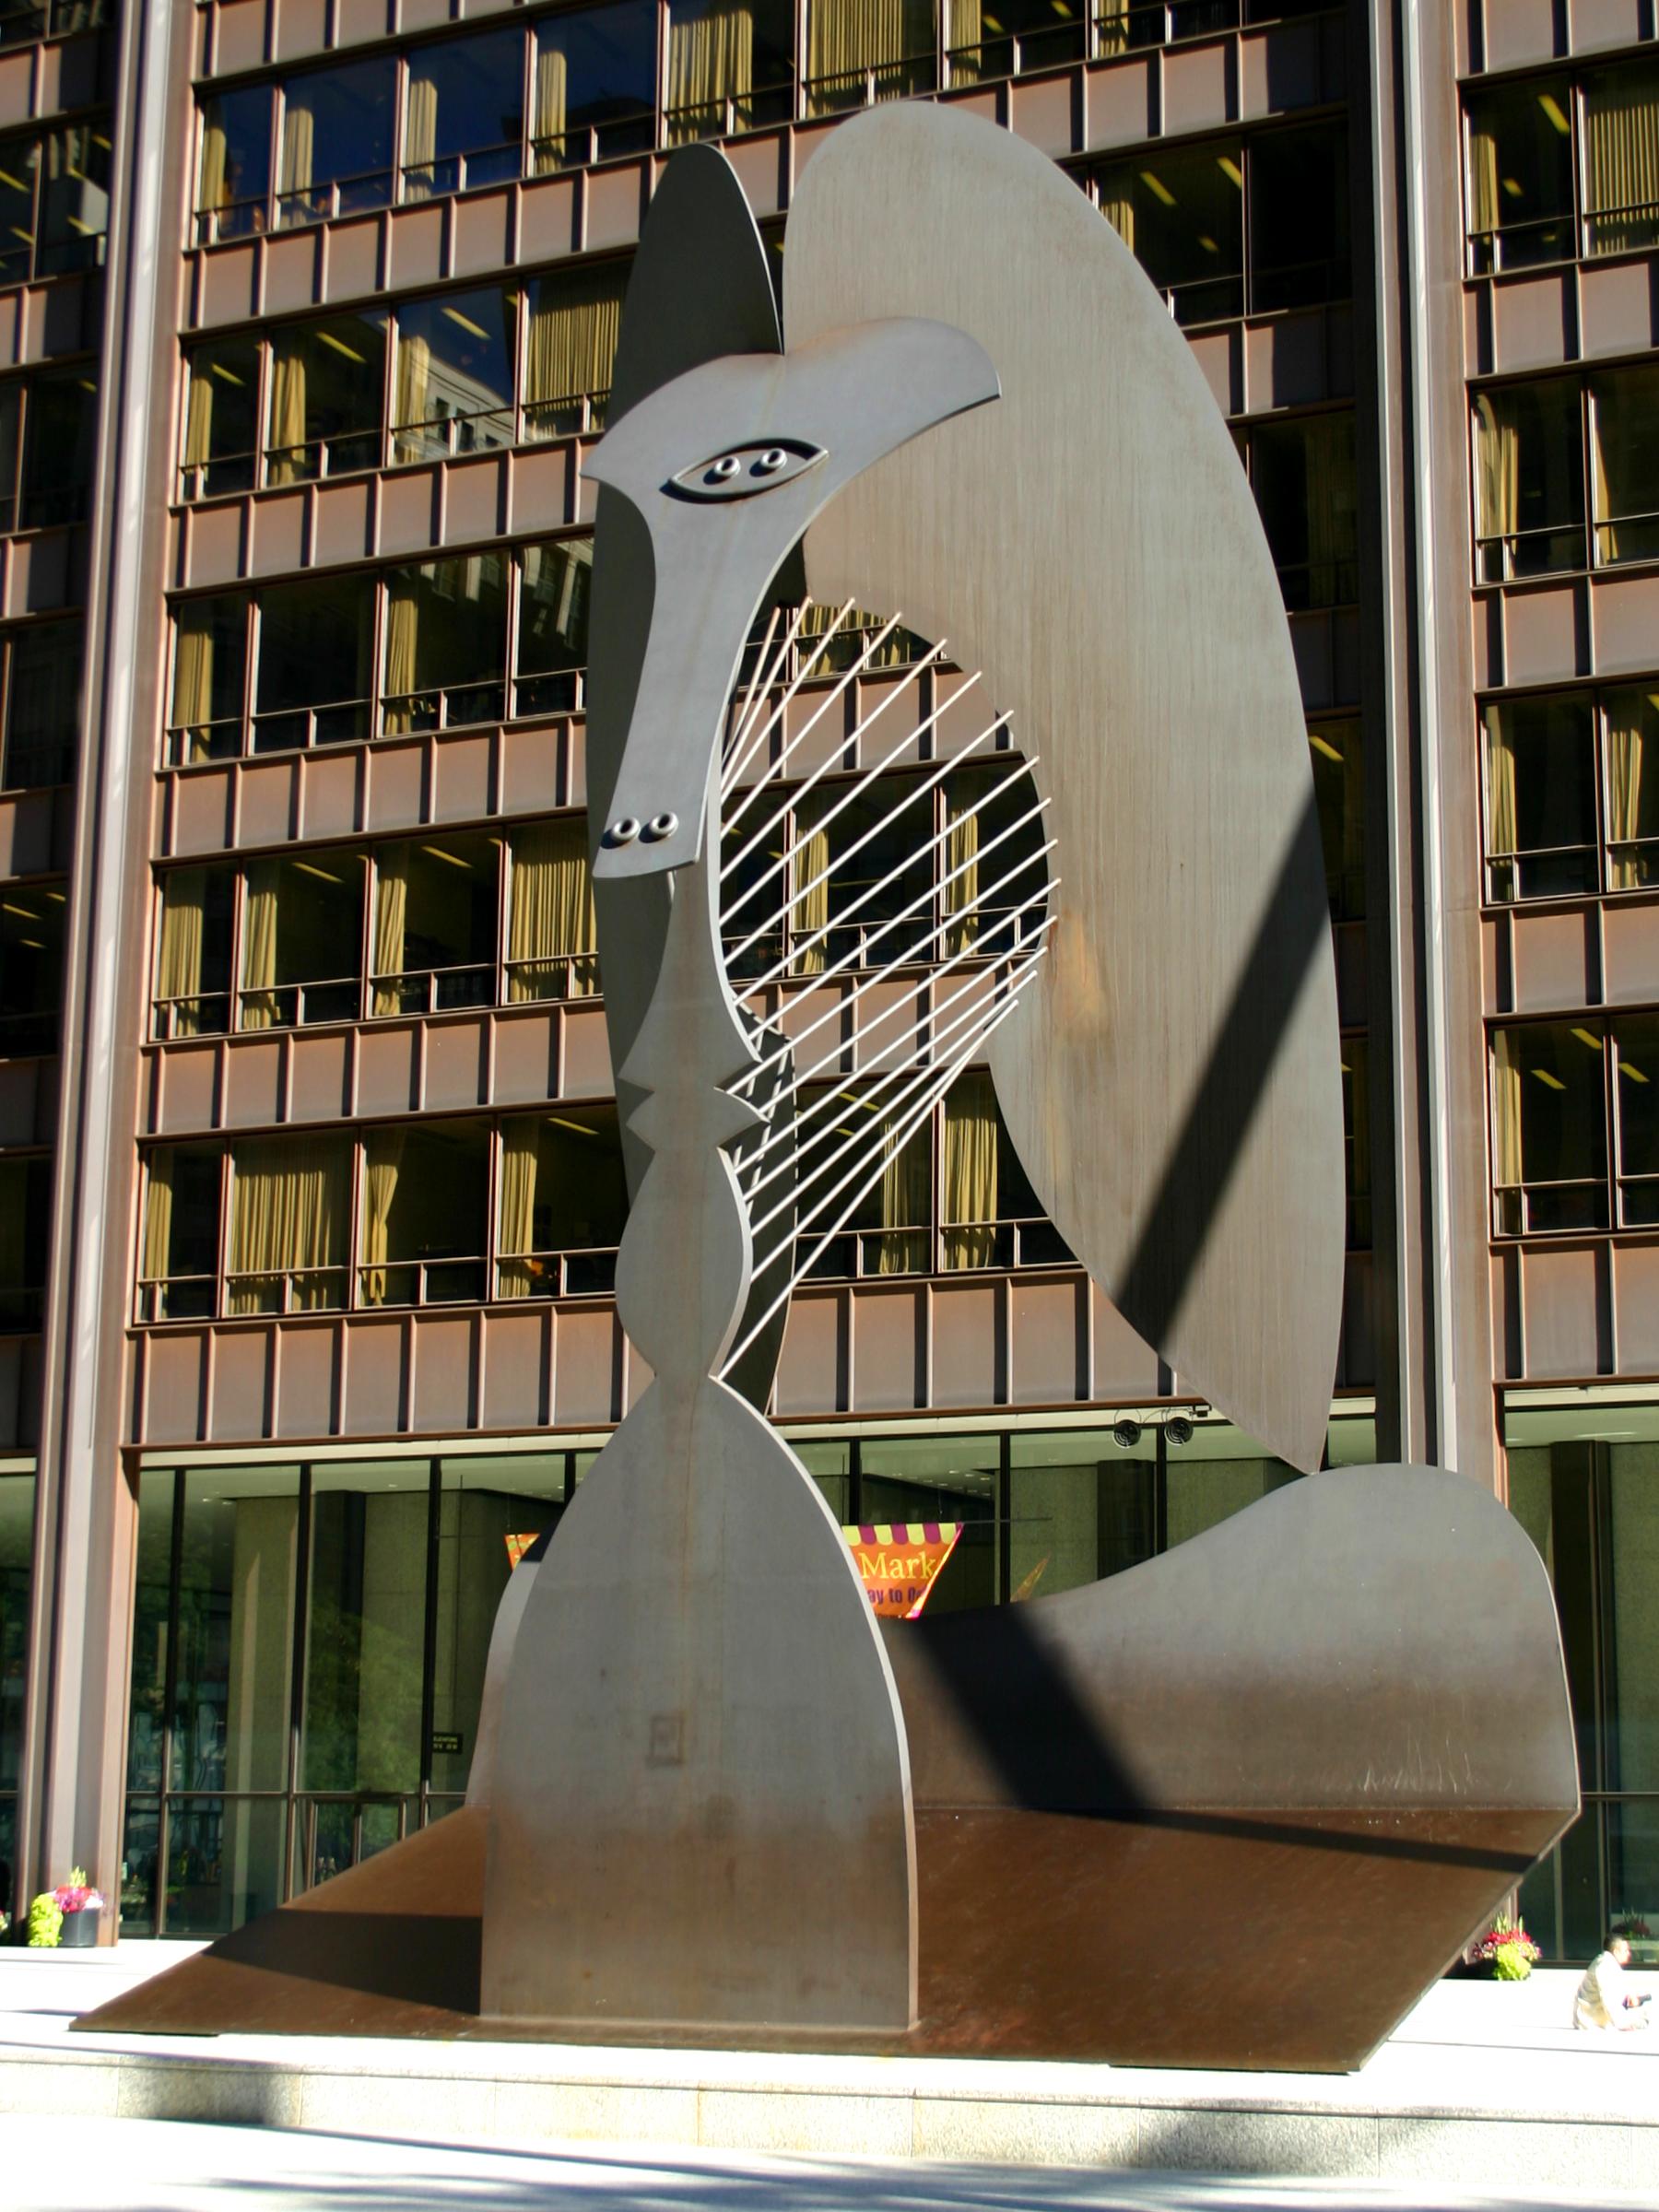 The Chicago Picasso public art sculpture